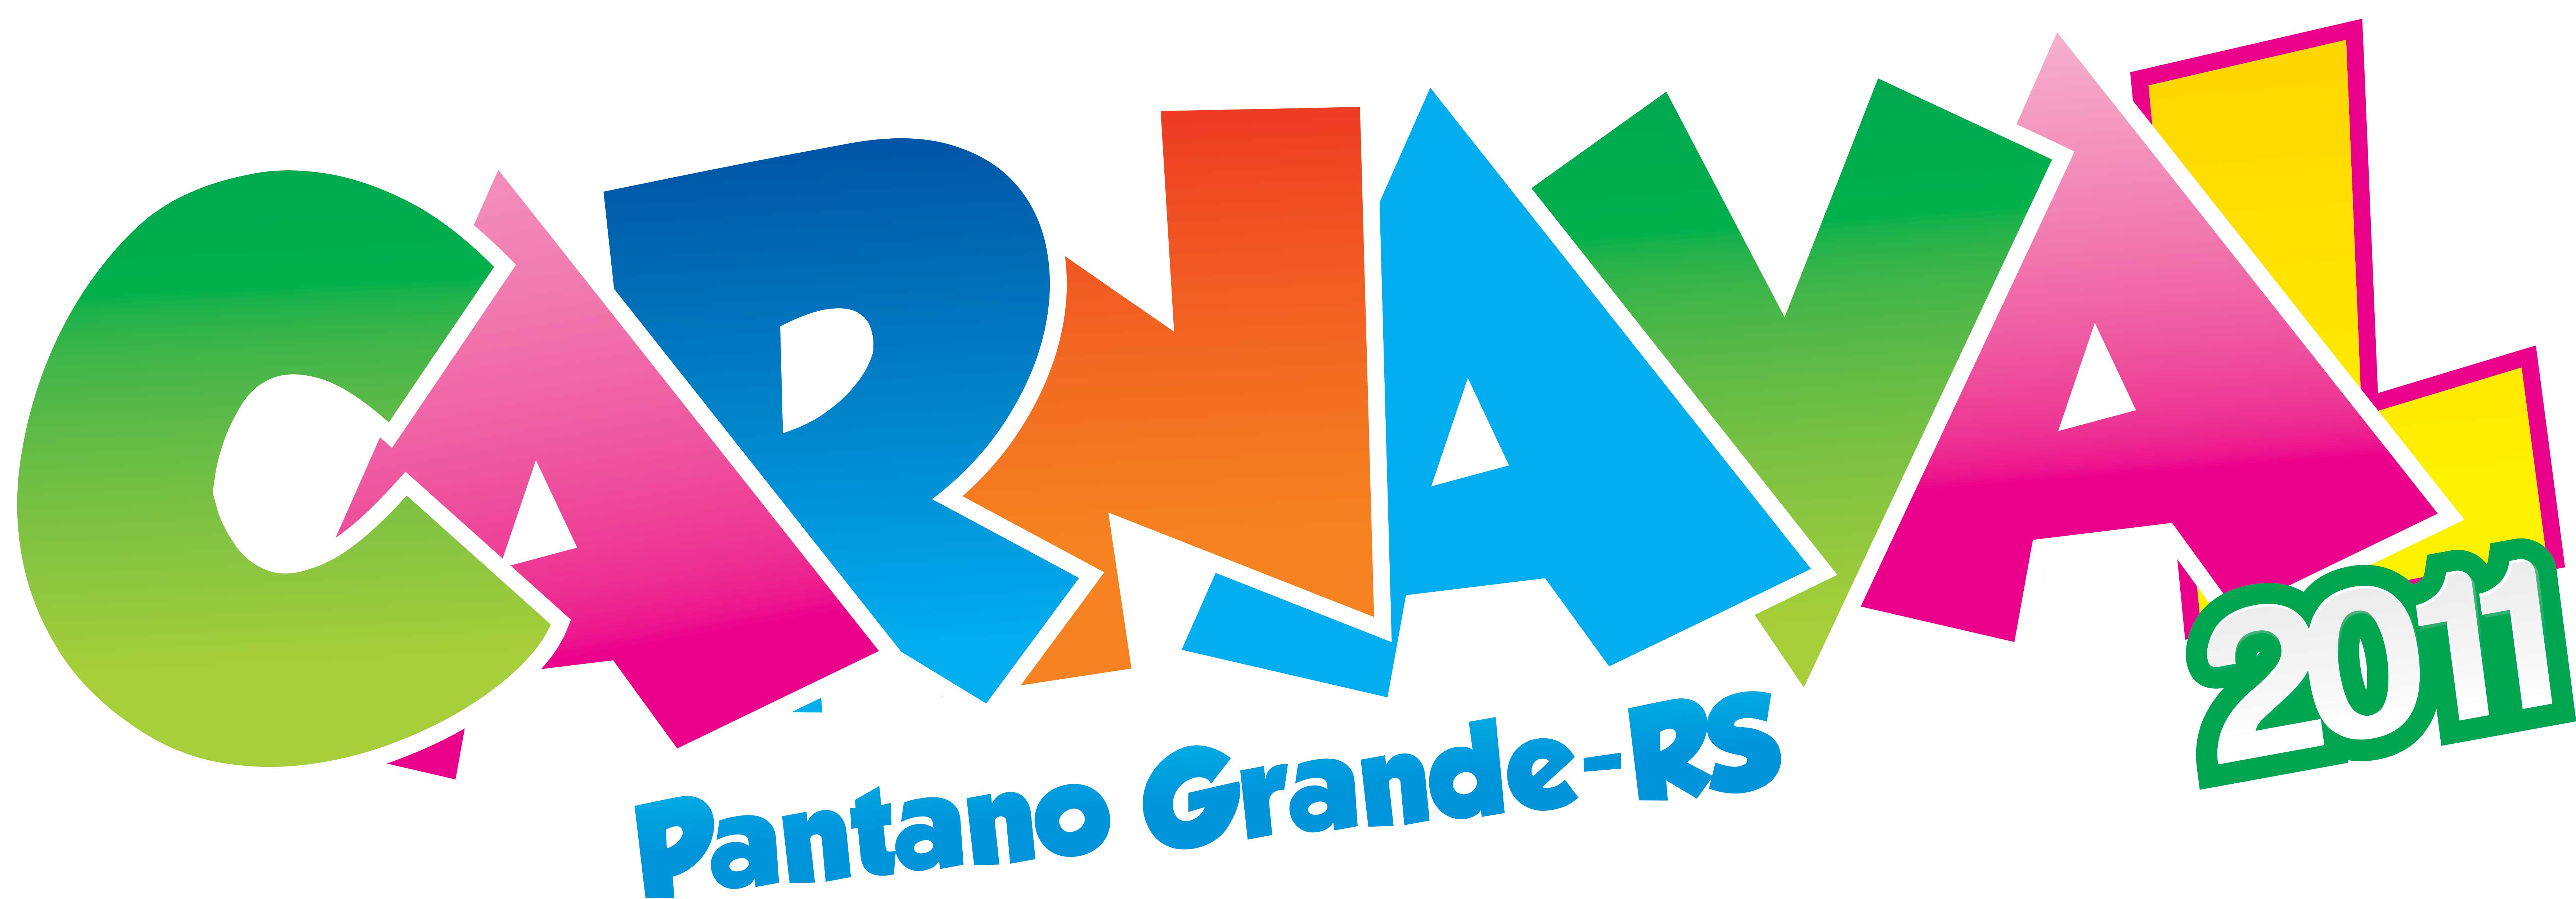 Carnaval - Pantano Grande Logo photo - 1